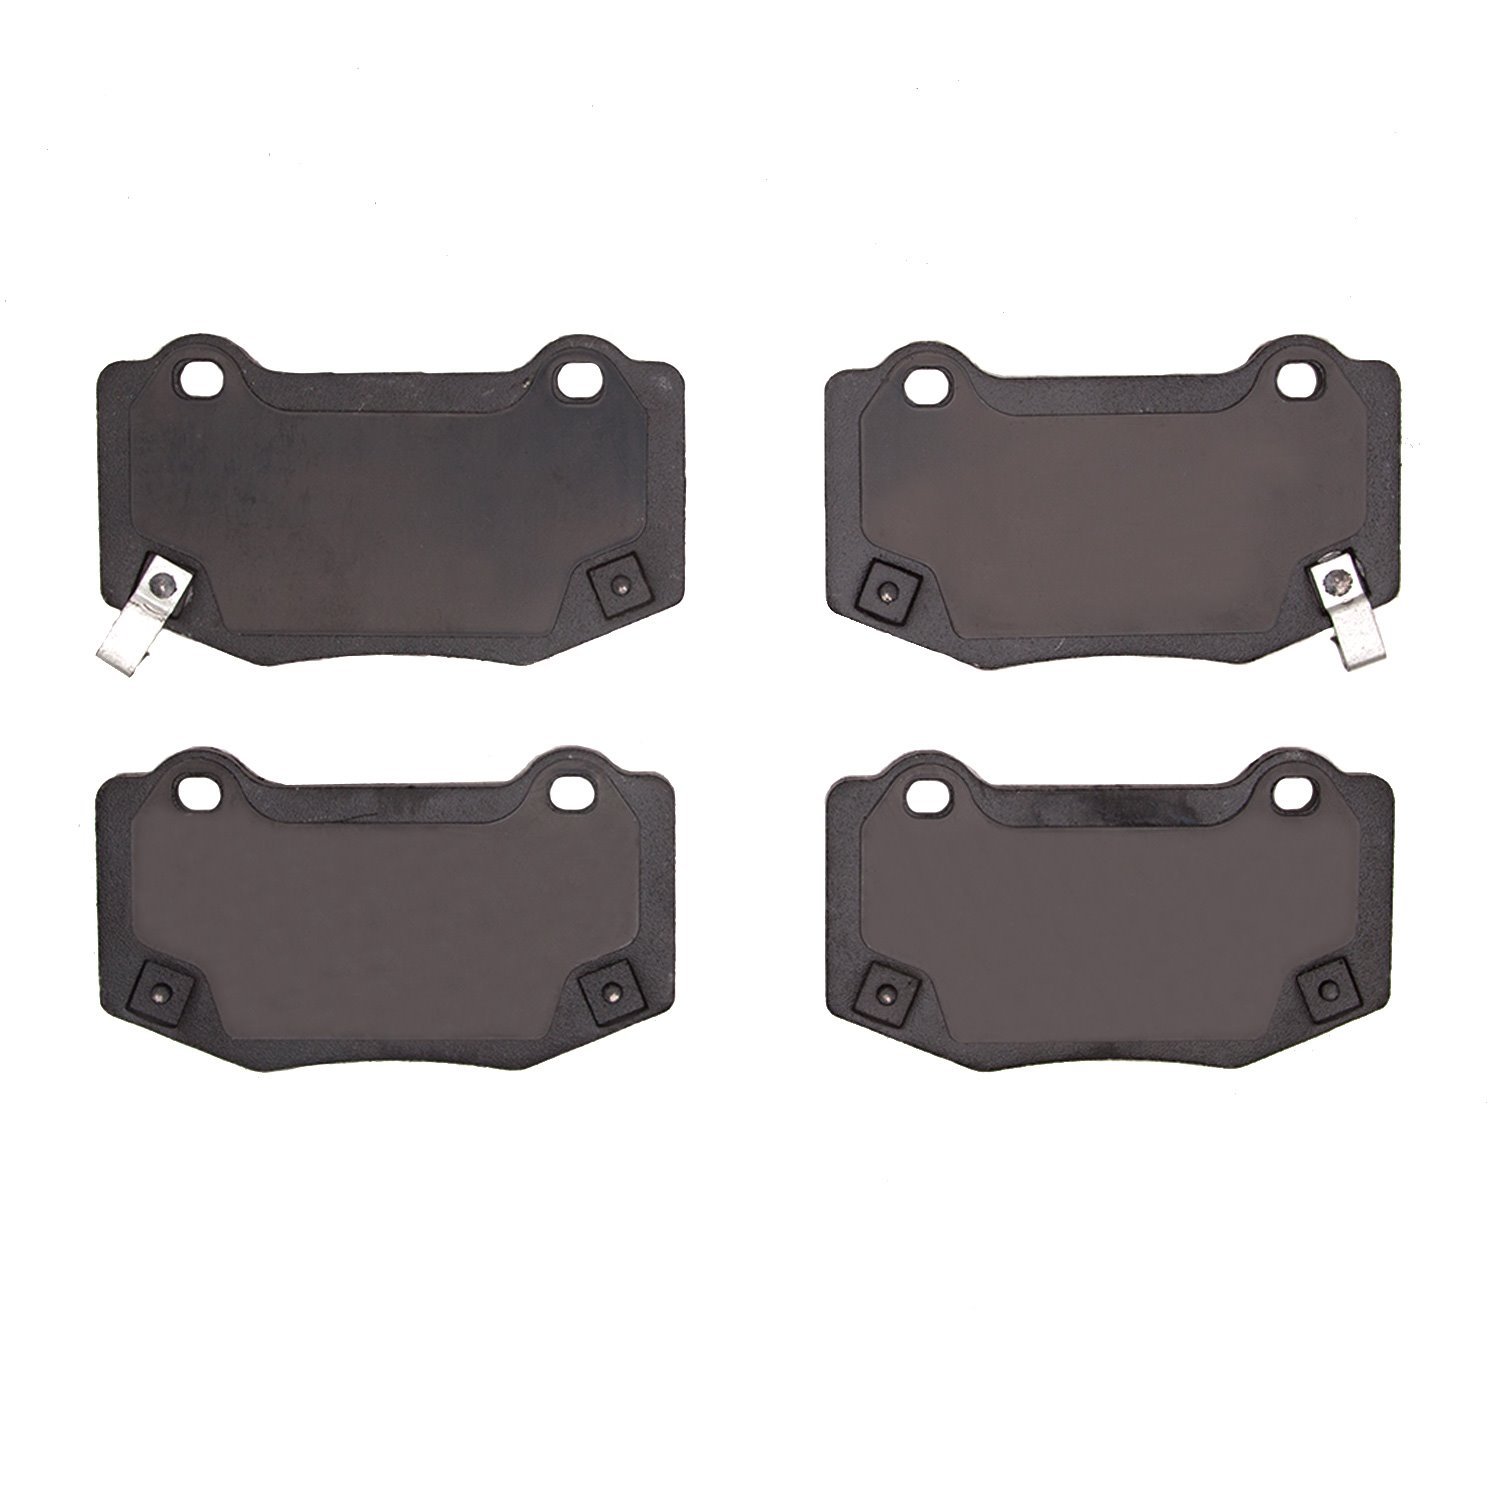 1000-1718-00 Track/Street Low-Metallic Brake Pads Kit, Fits Select GM, Position: Rear